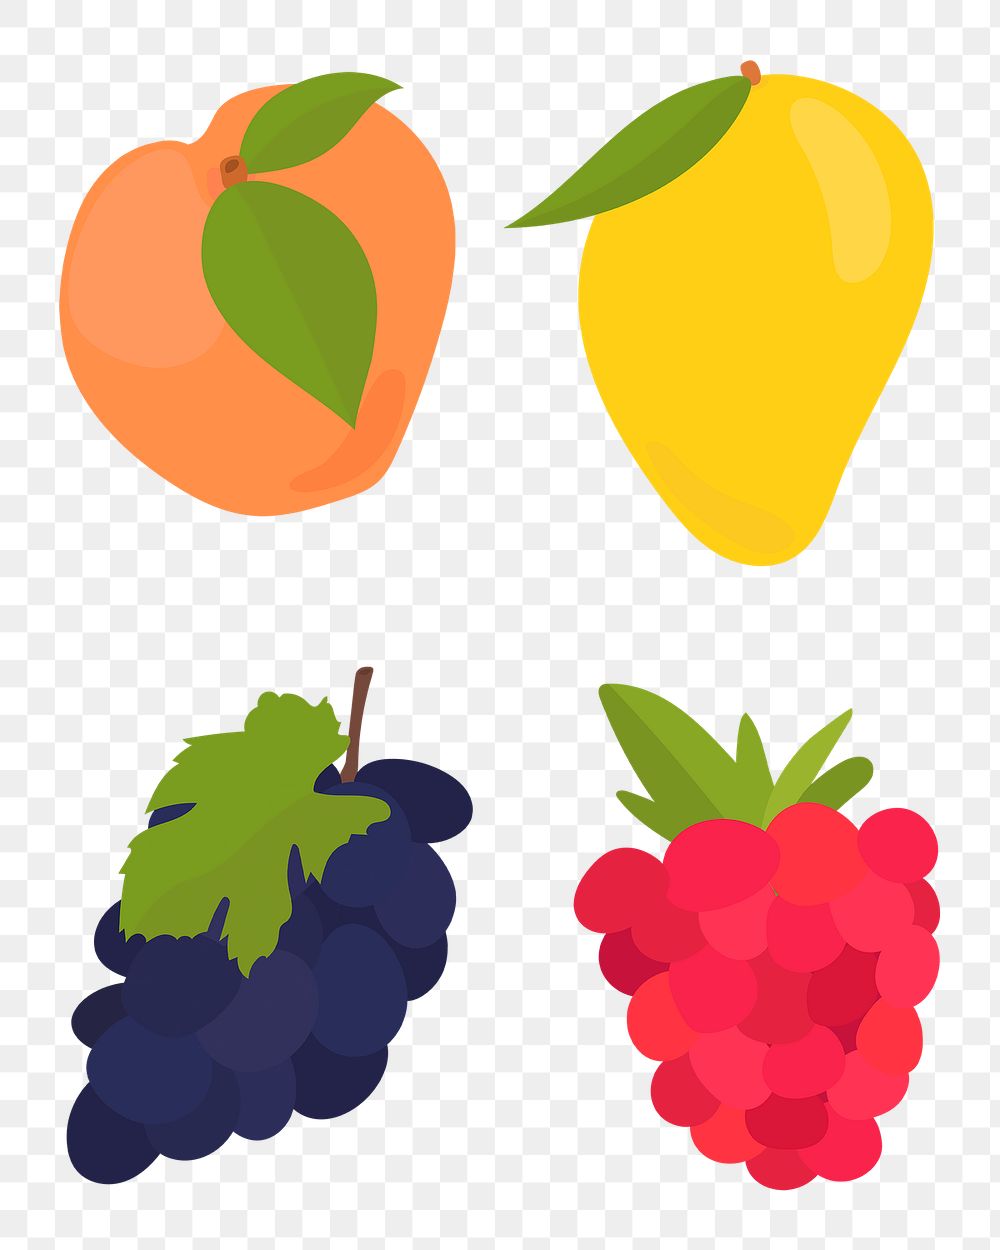  Png pastel fruit cartoon sticker set